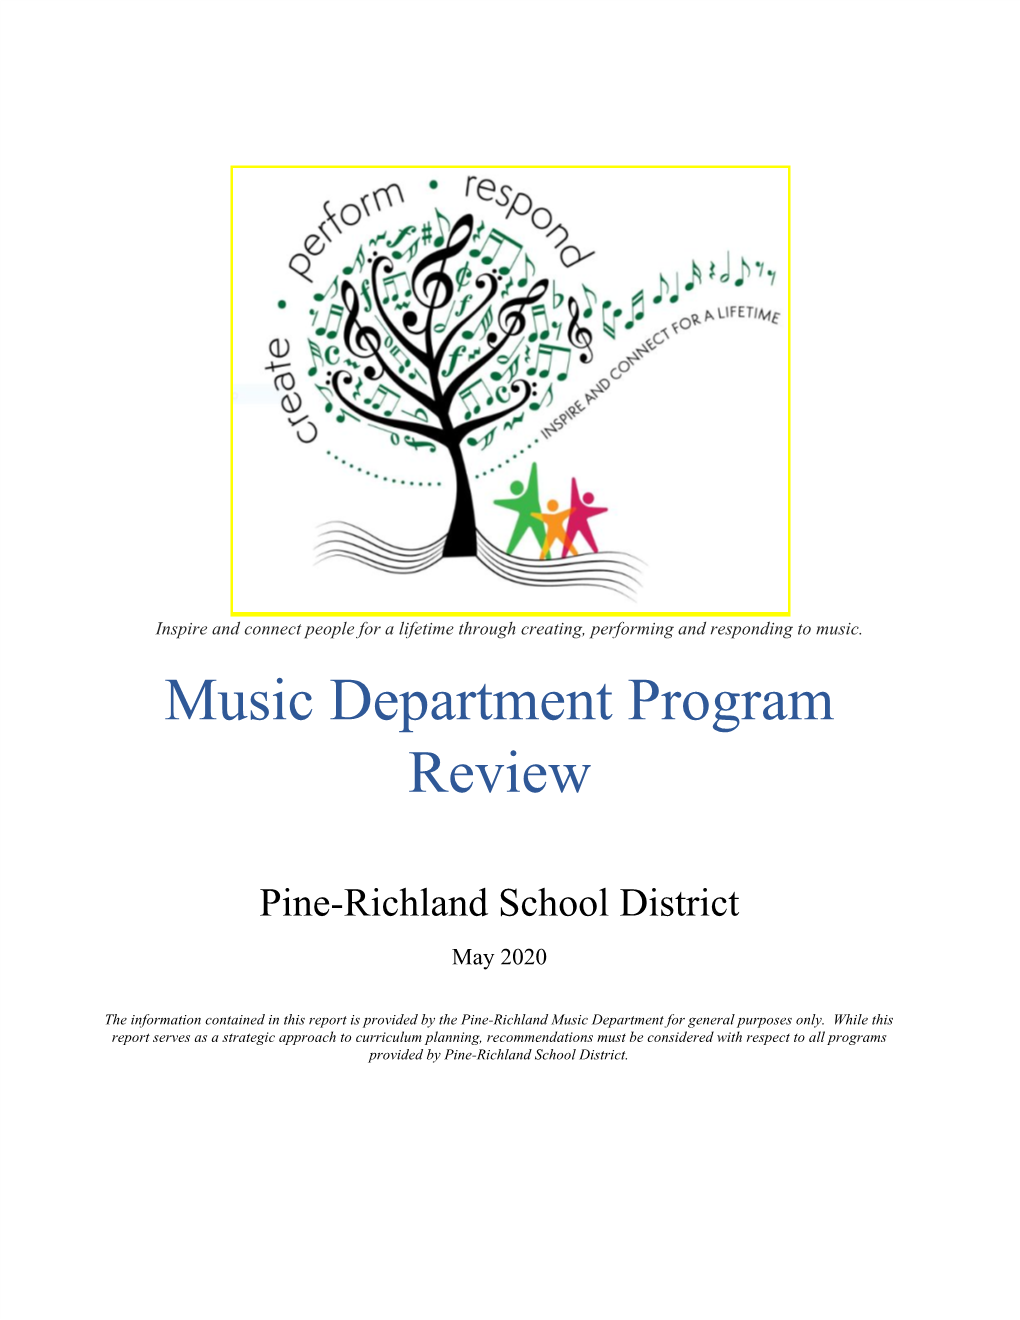 Music Department Program Review